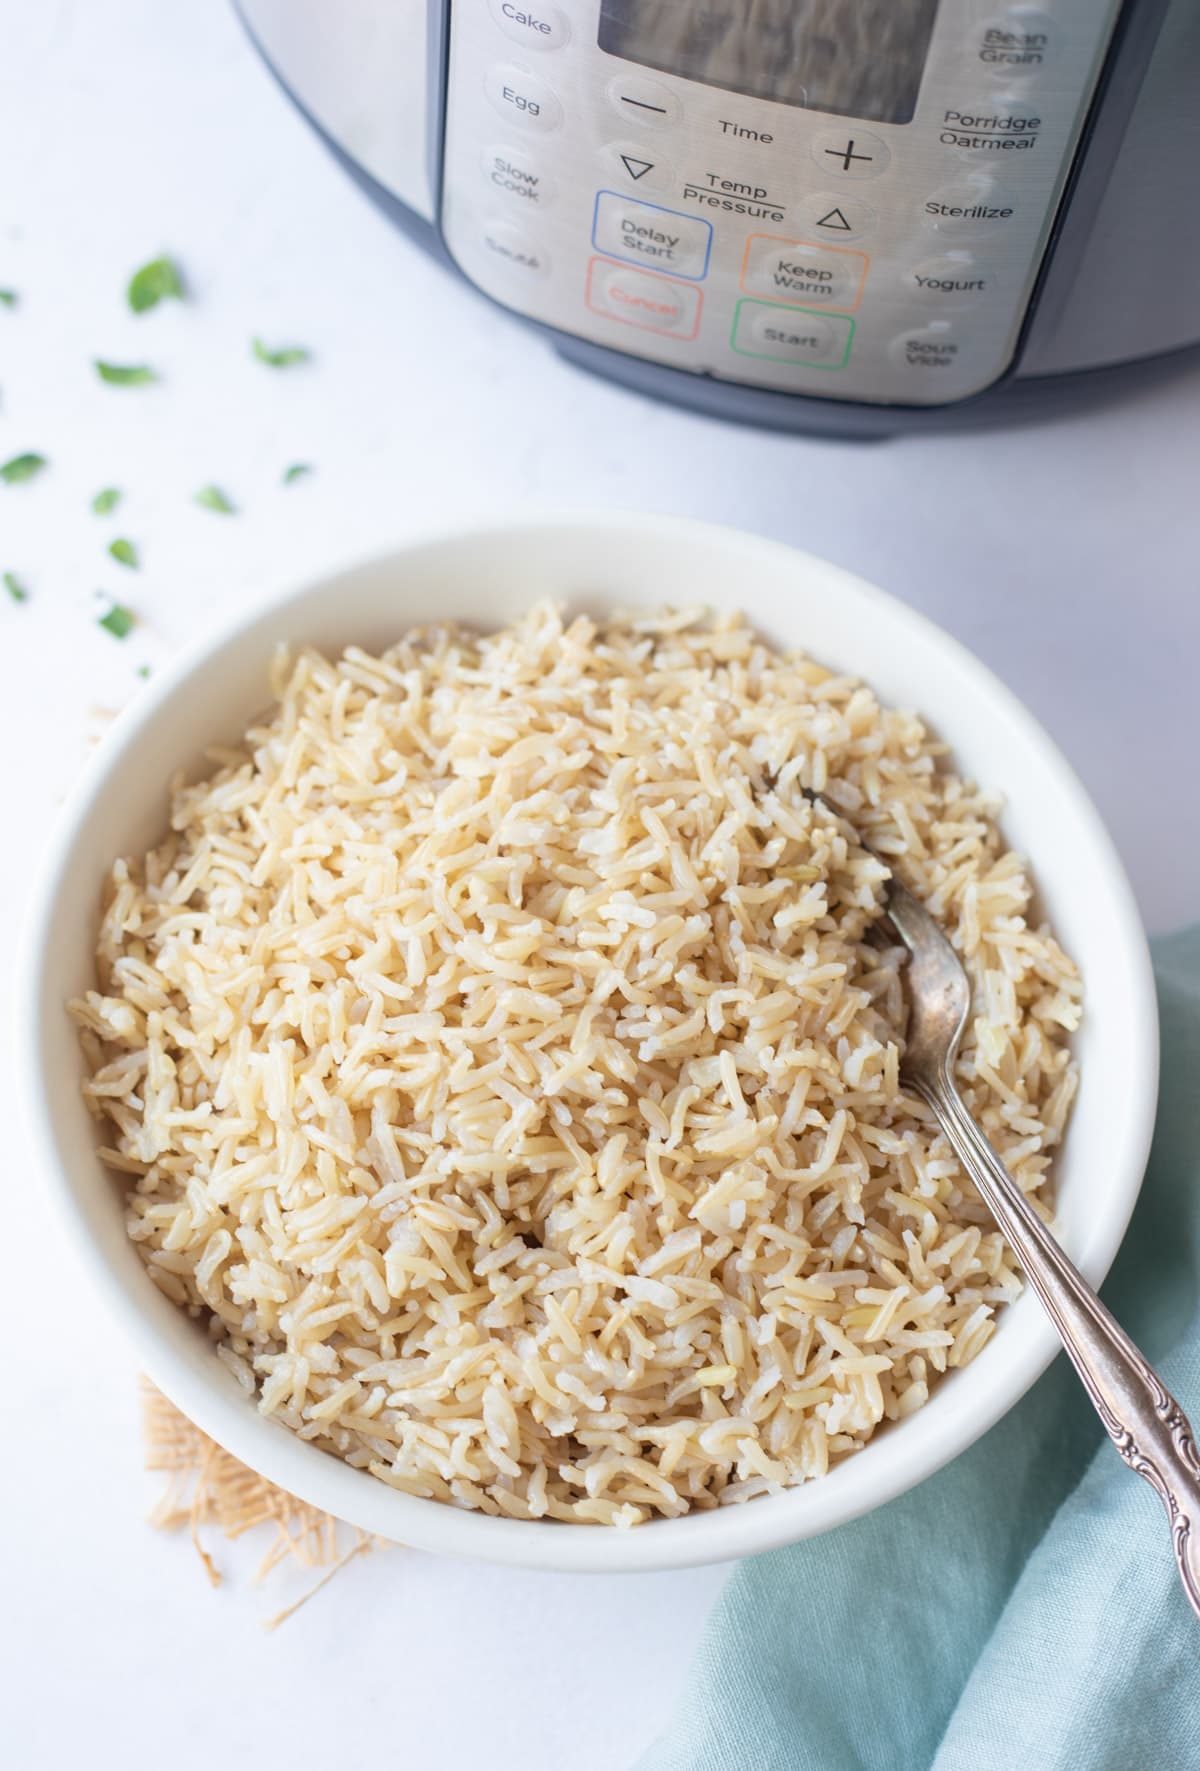 Instant Pot Basmati Rice Recipe - Piping Pot Curry